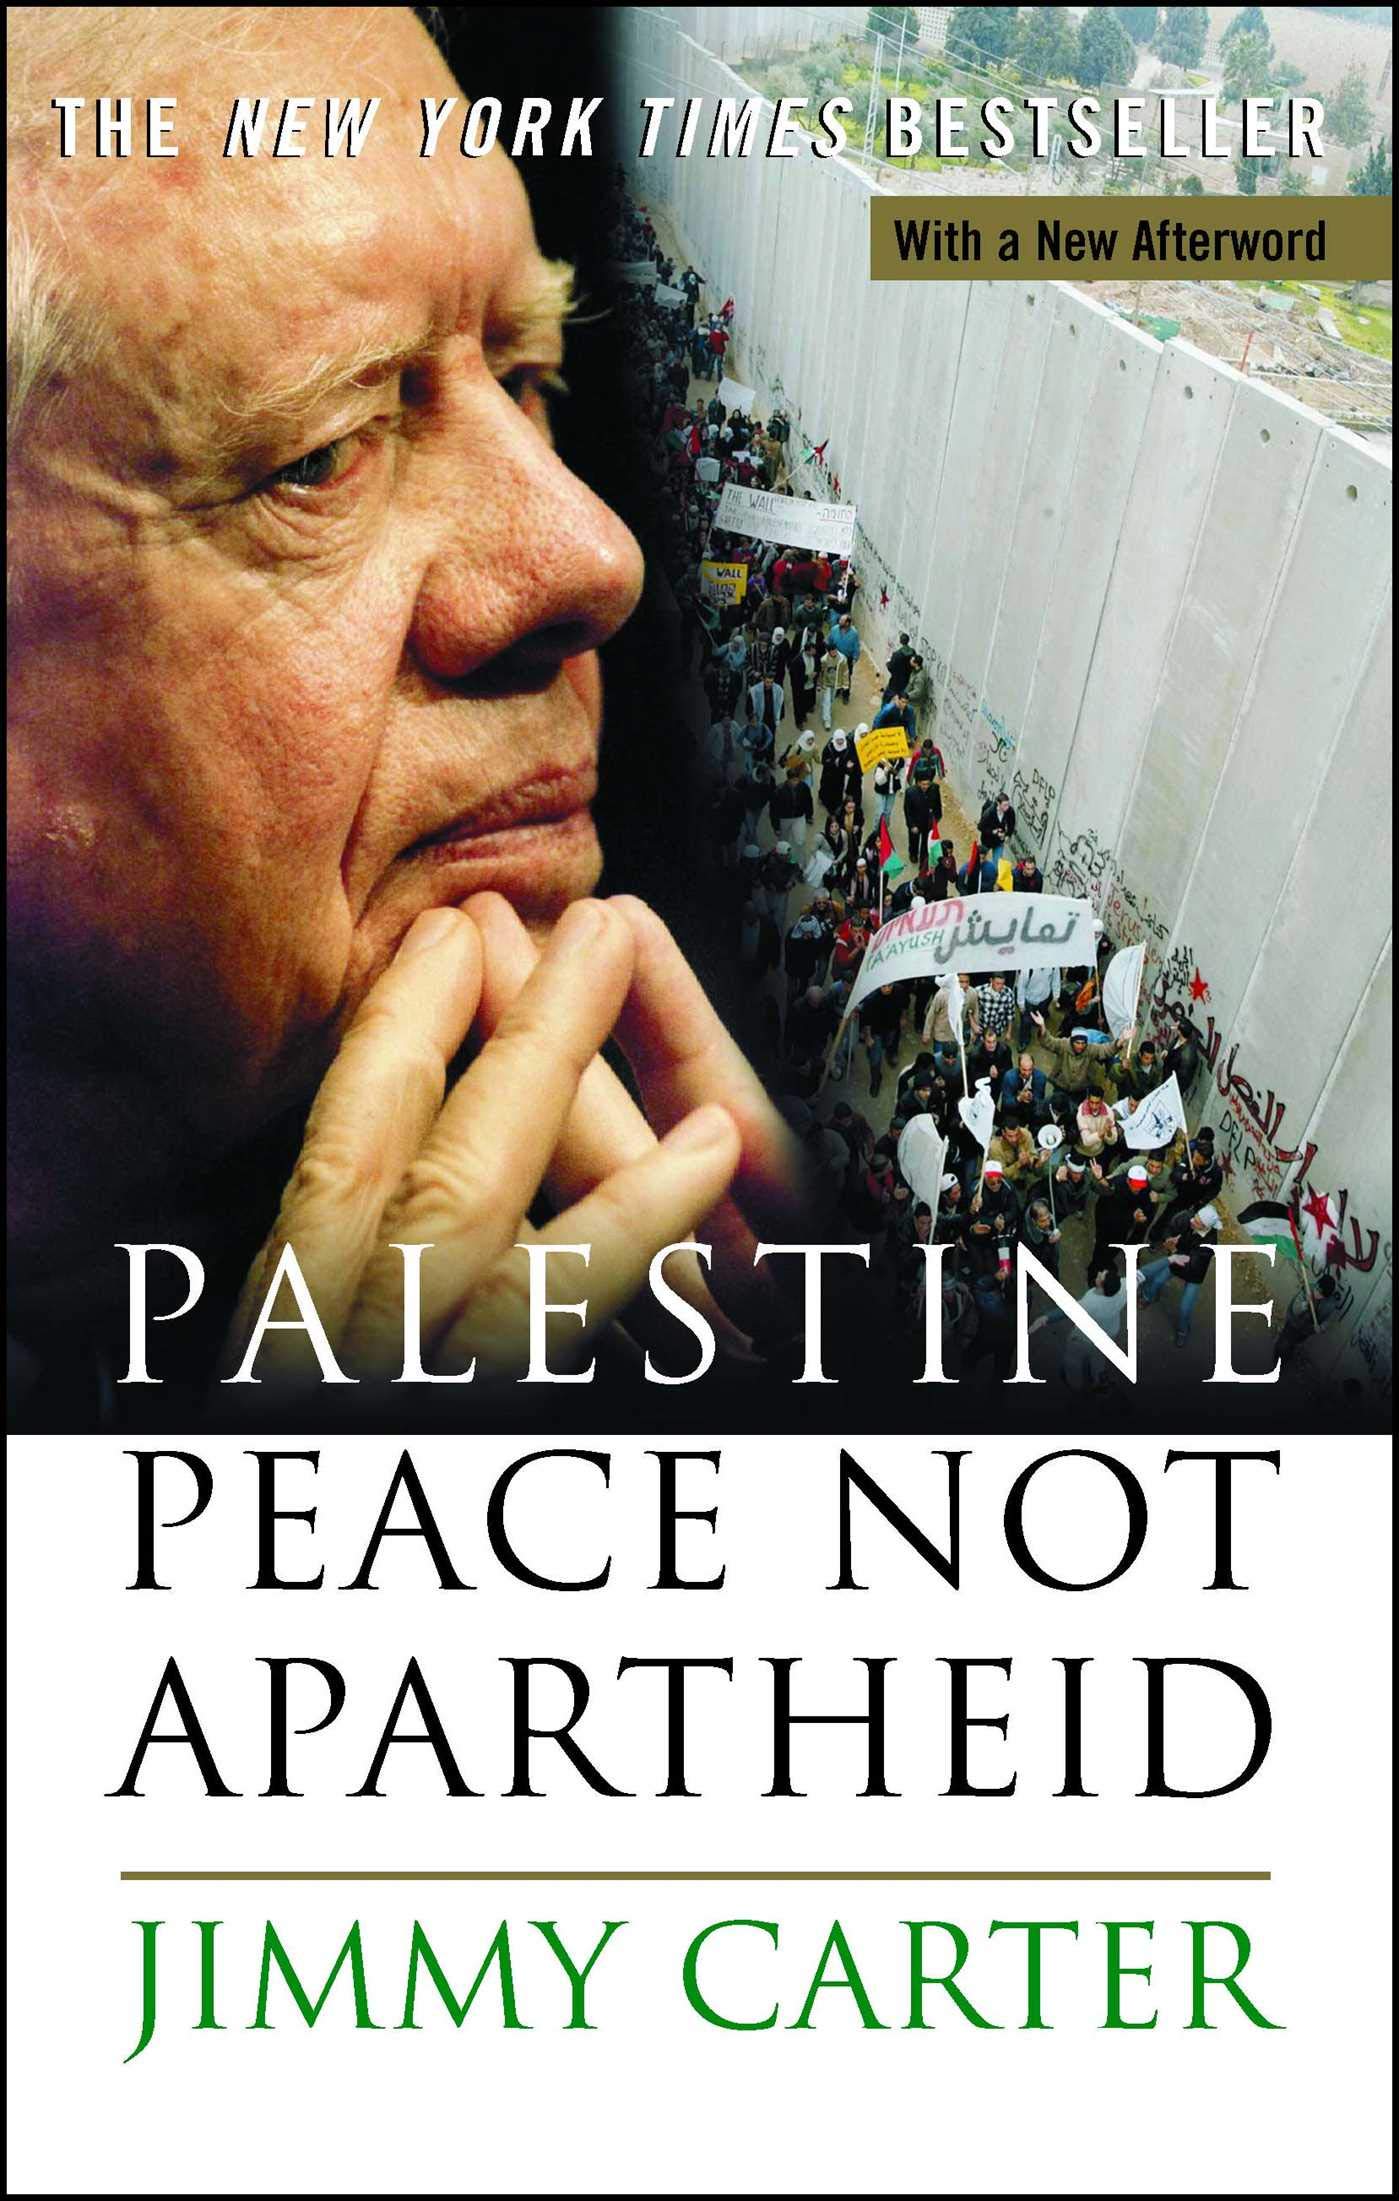 jimmy carter palestine peace not apartheid